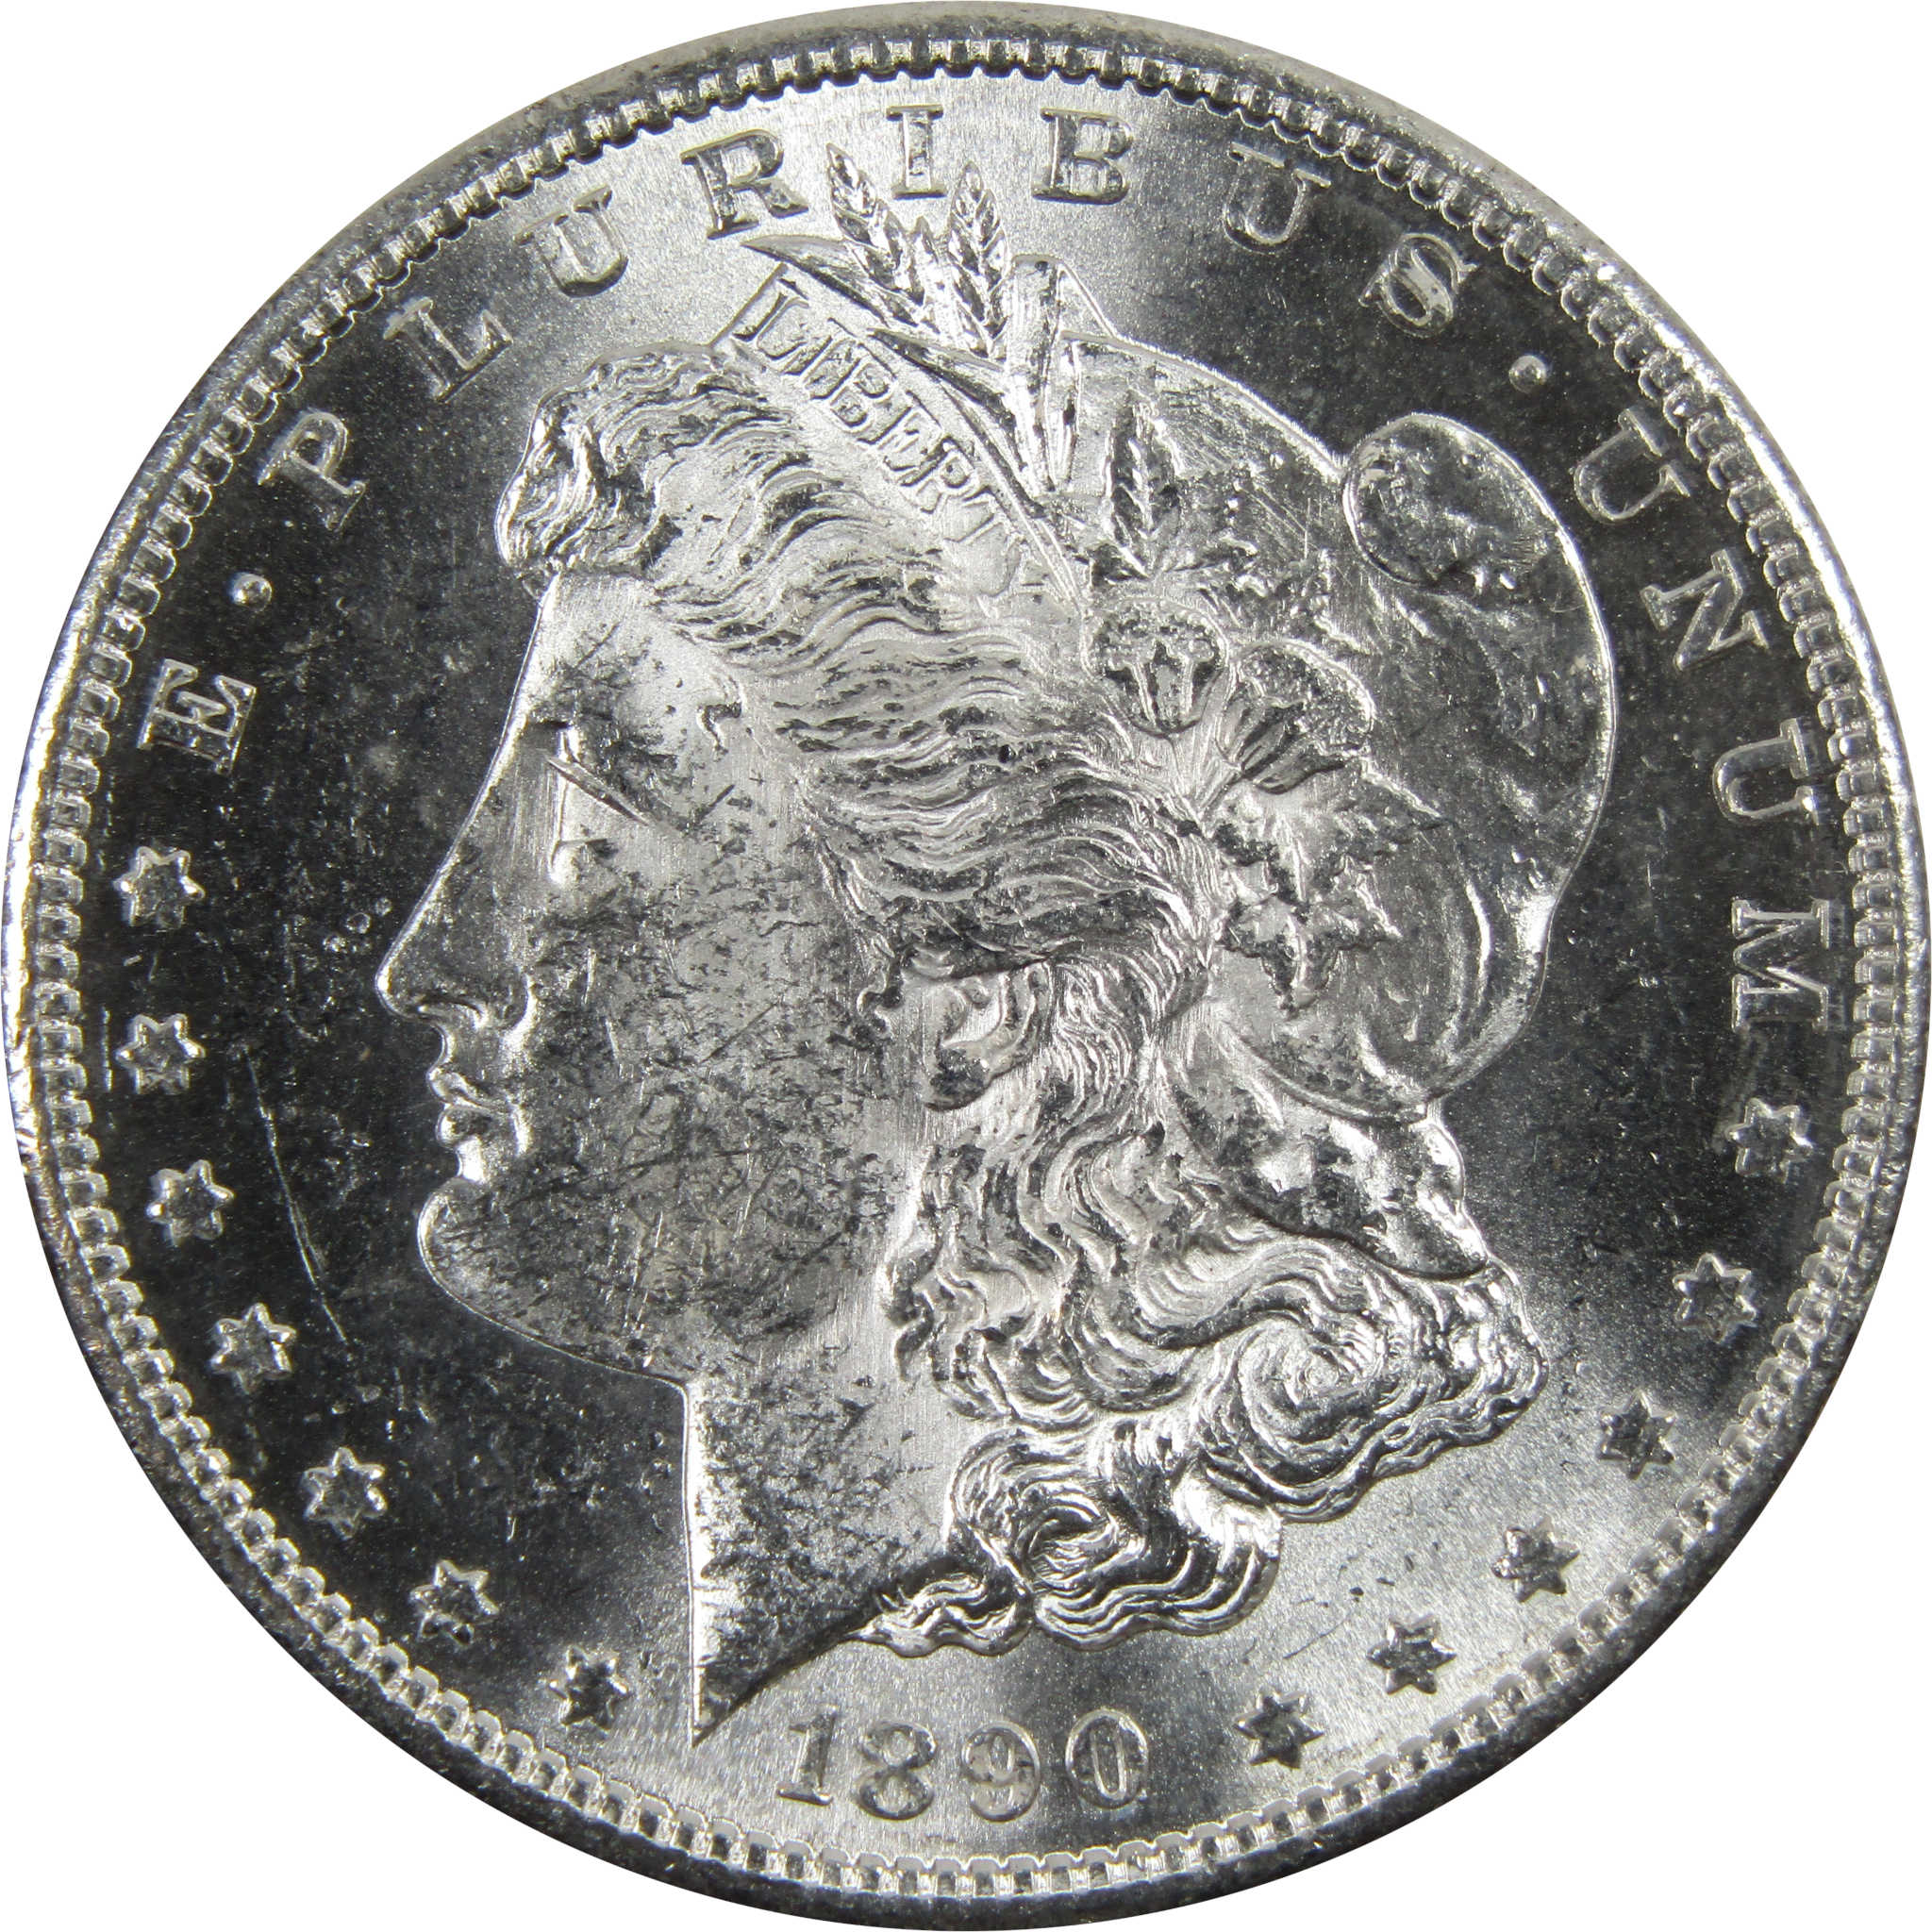 1890 S Morgan Dollar BU Uncirculated 90% Silver $1 Coin SKU:I4919 - Morgan coin - Morgan silver dollar - Morgan silver dollar for sale - Profile Coins &amp; Collectibles